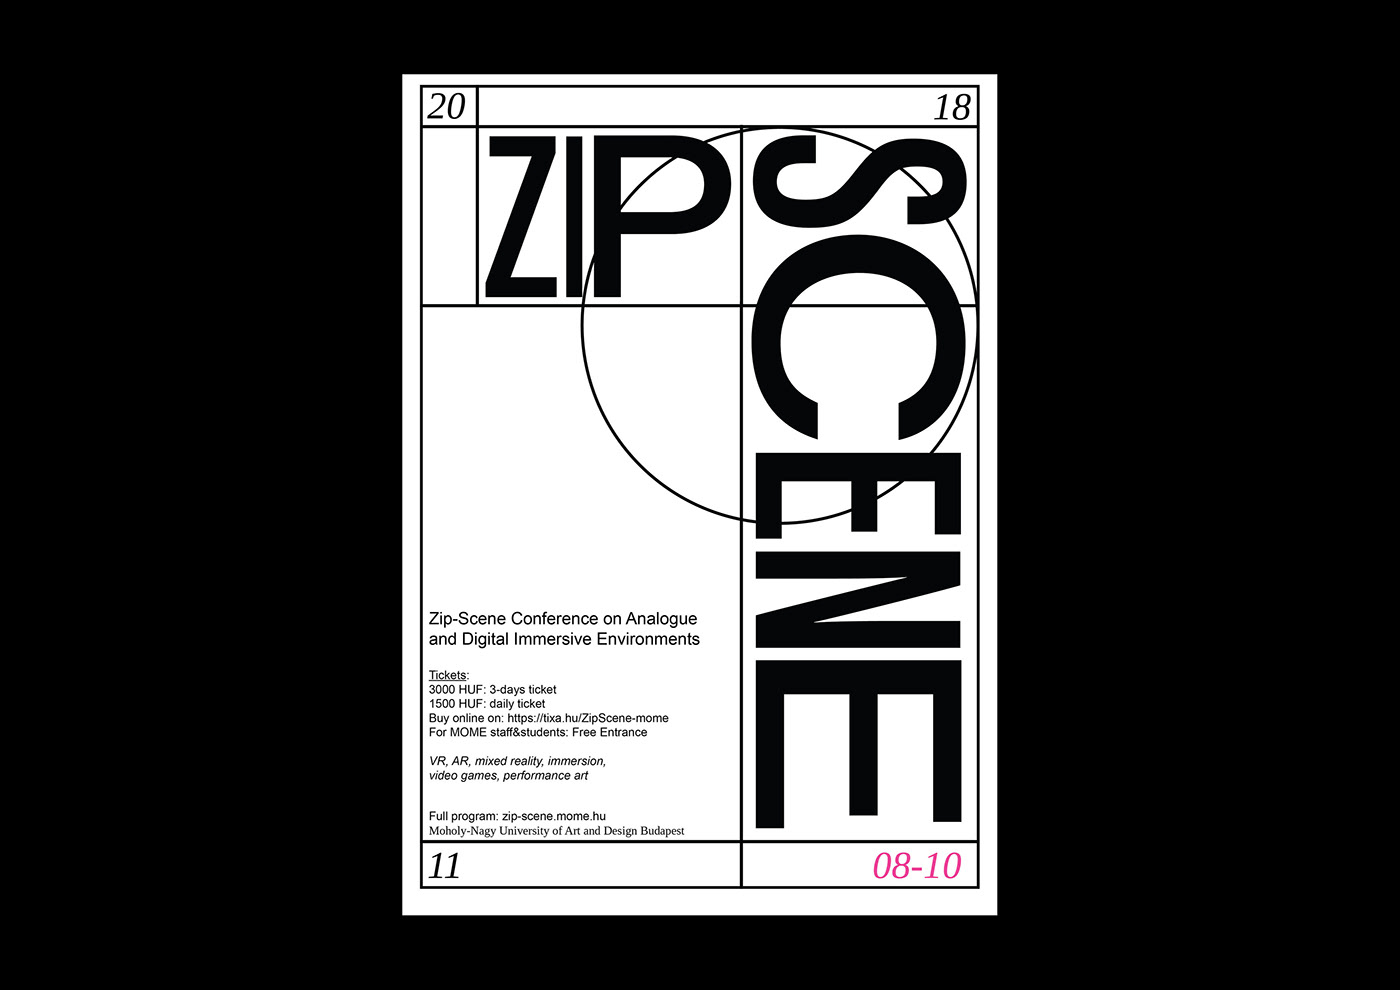 ZIP-SCENE Conference on Behance